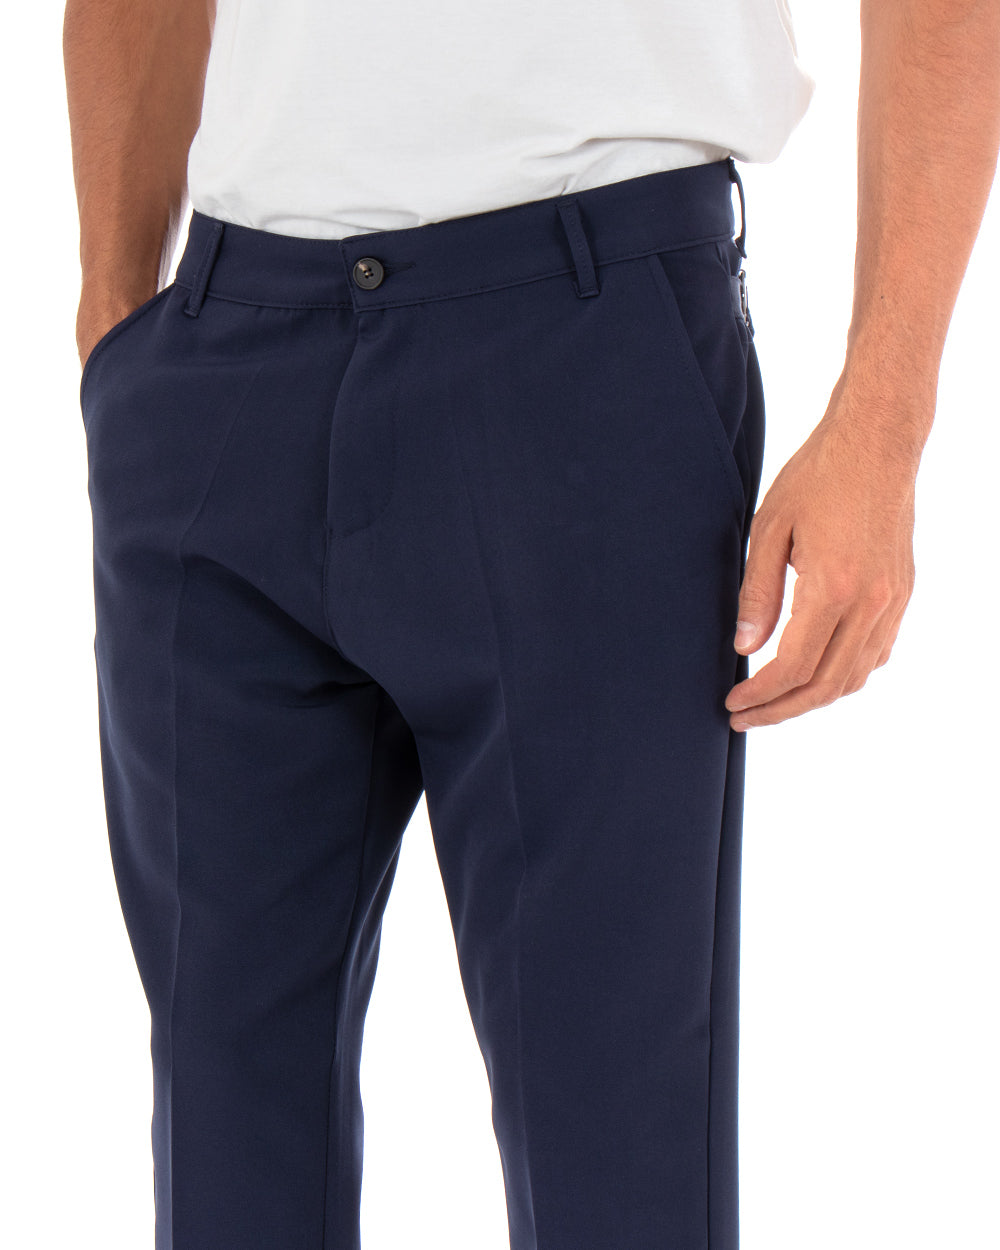 Pantaloni Uomo Tasca America Viscosa Classico Tinta Unita Blu Casual GIOSAL-P4067A